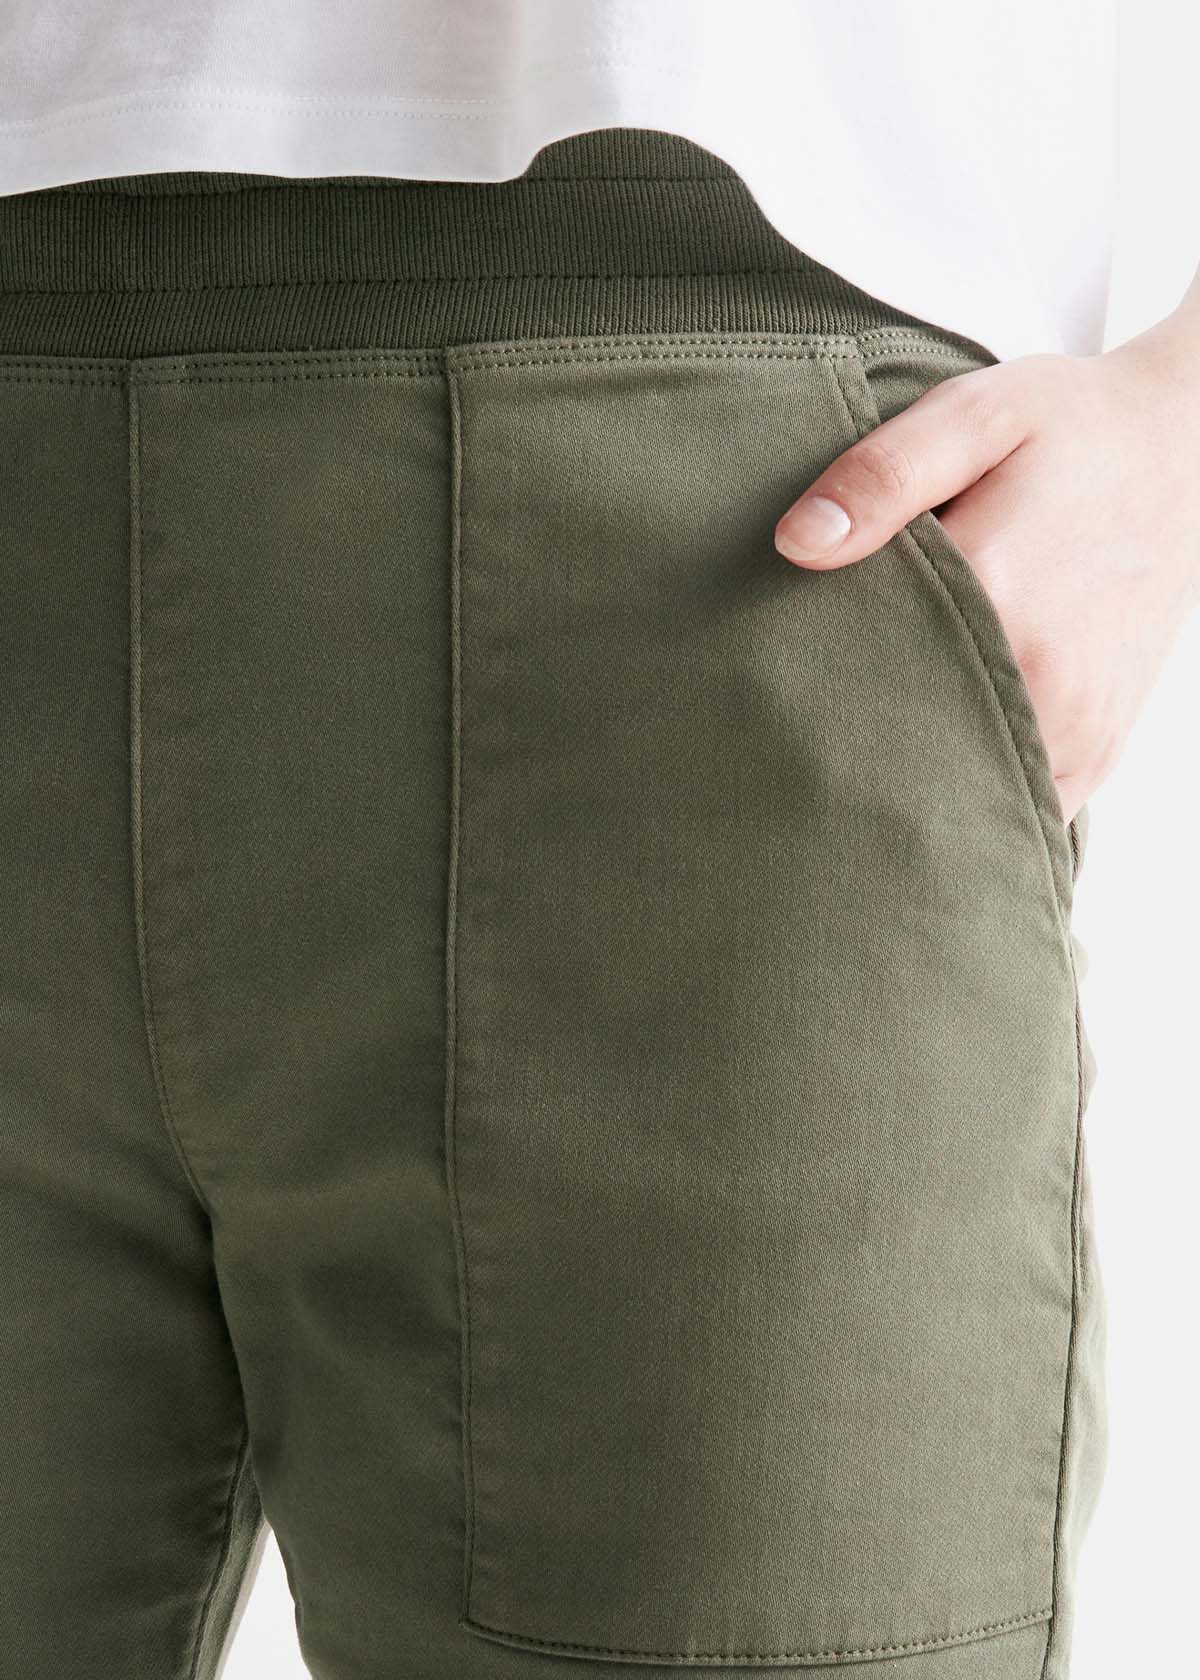 Women's Green Sweatpant Front Pocket